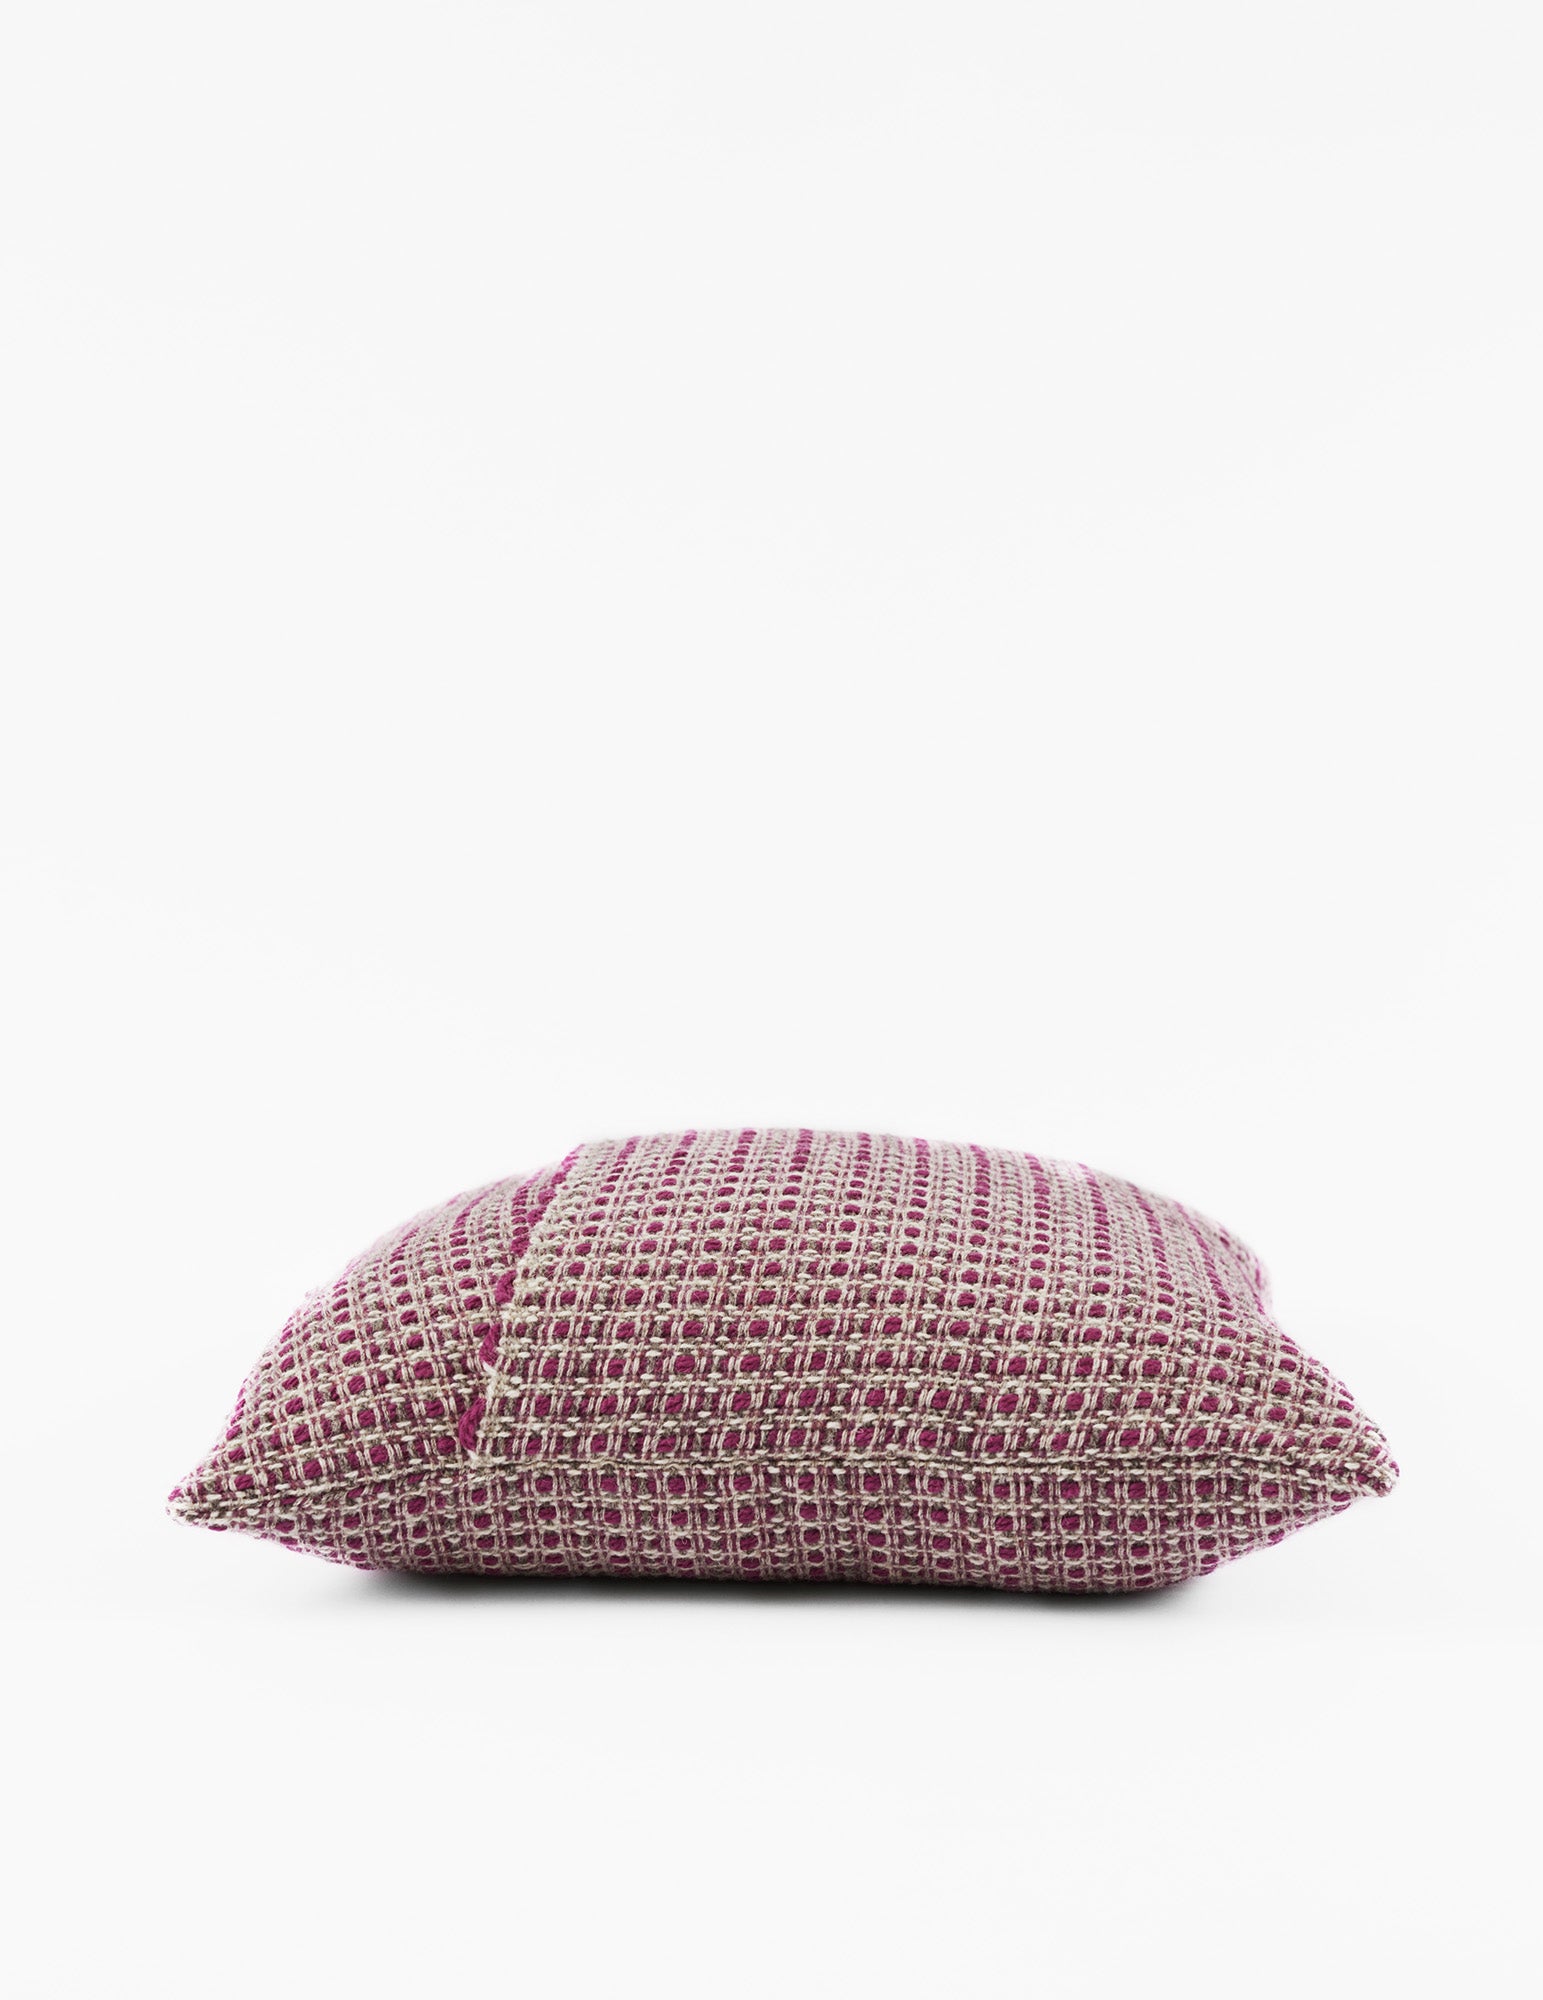 Salthill Tweed Cushion - M2